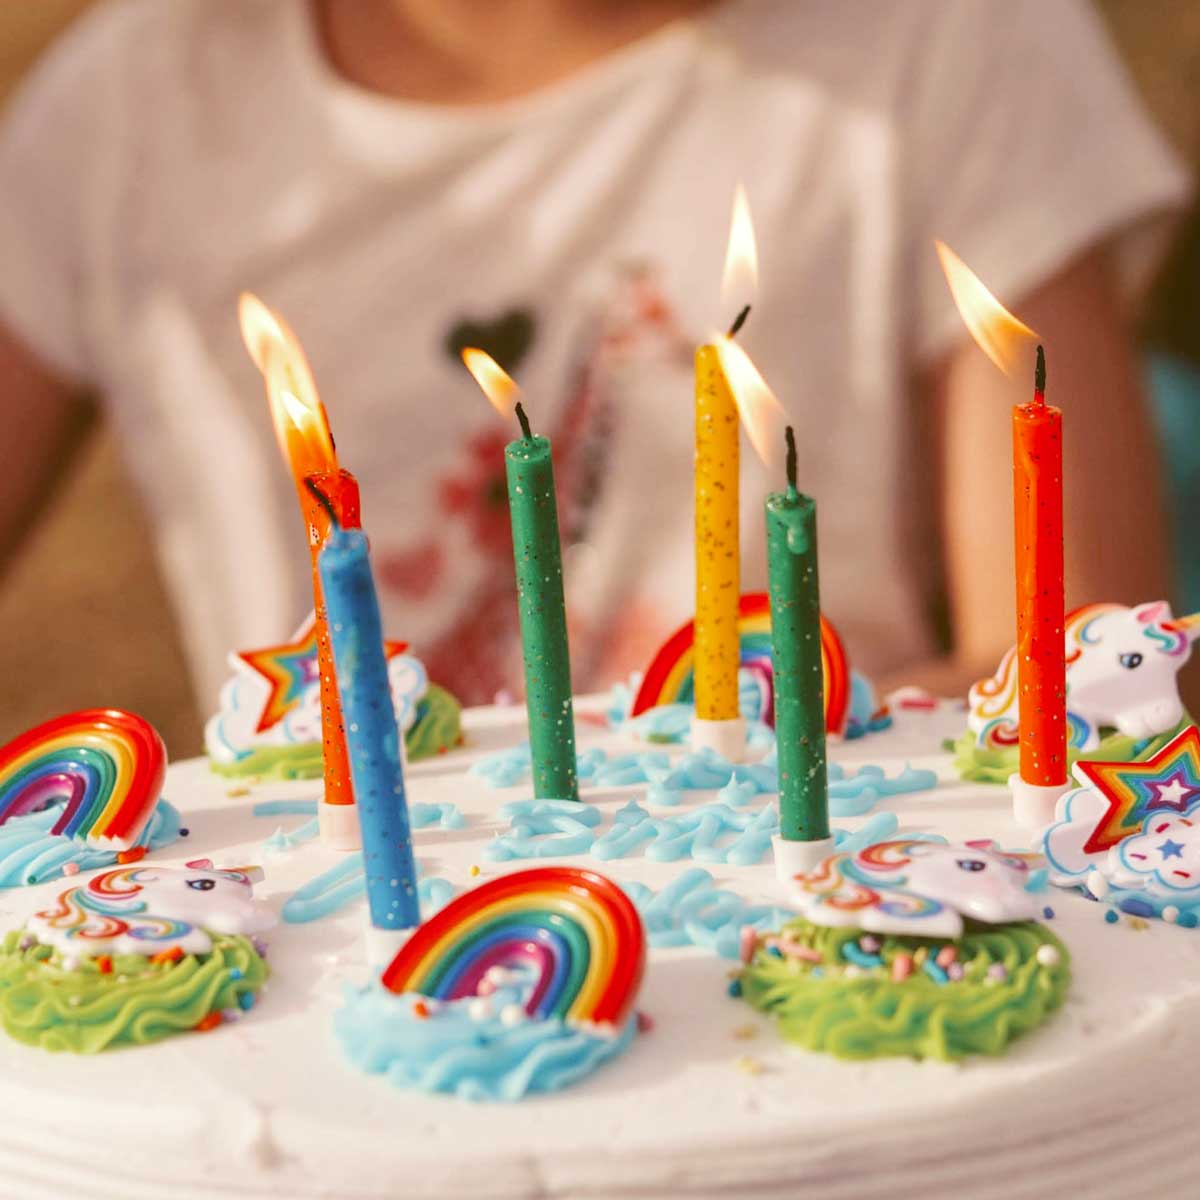 Play Happy Birthday To You Intermediate Piano Music Sheet On Virtual Piano - roblox happy birthday song id